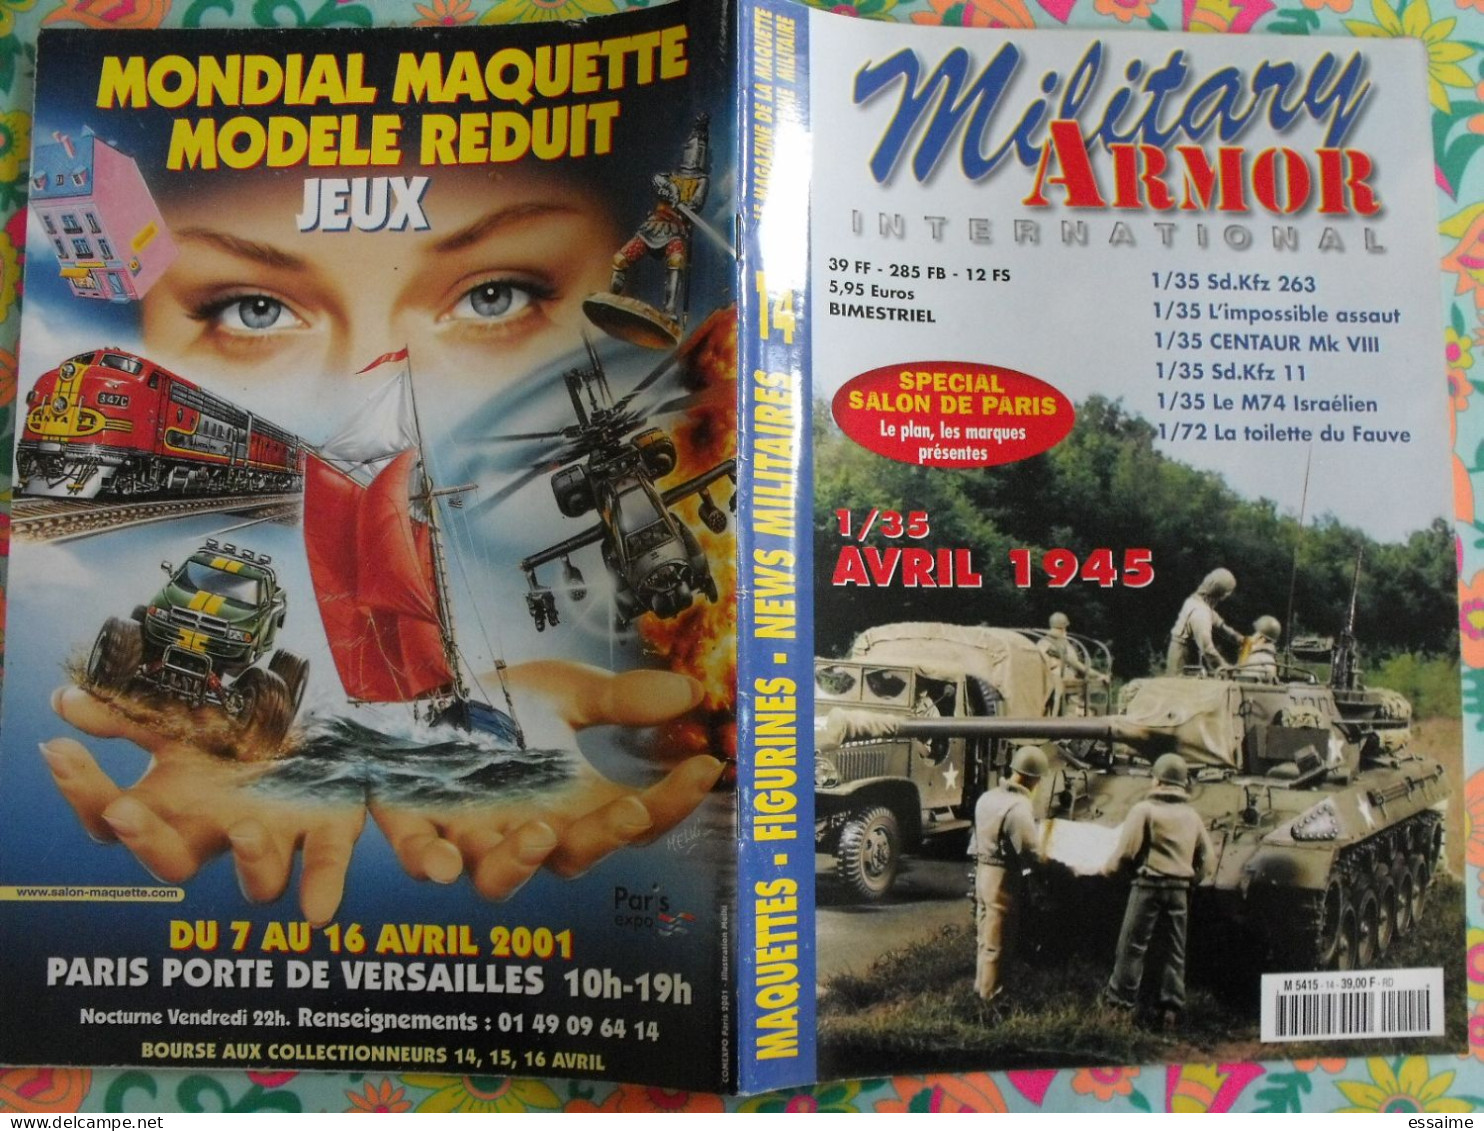 3 n° de Military Armor international magazine n° 14,23,34 de 2002-2003. maquette figurine militaire